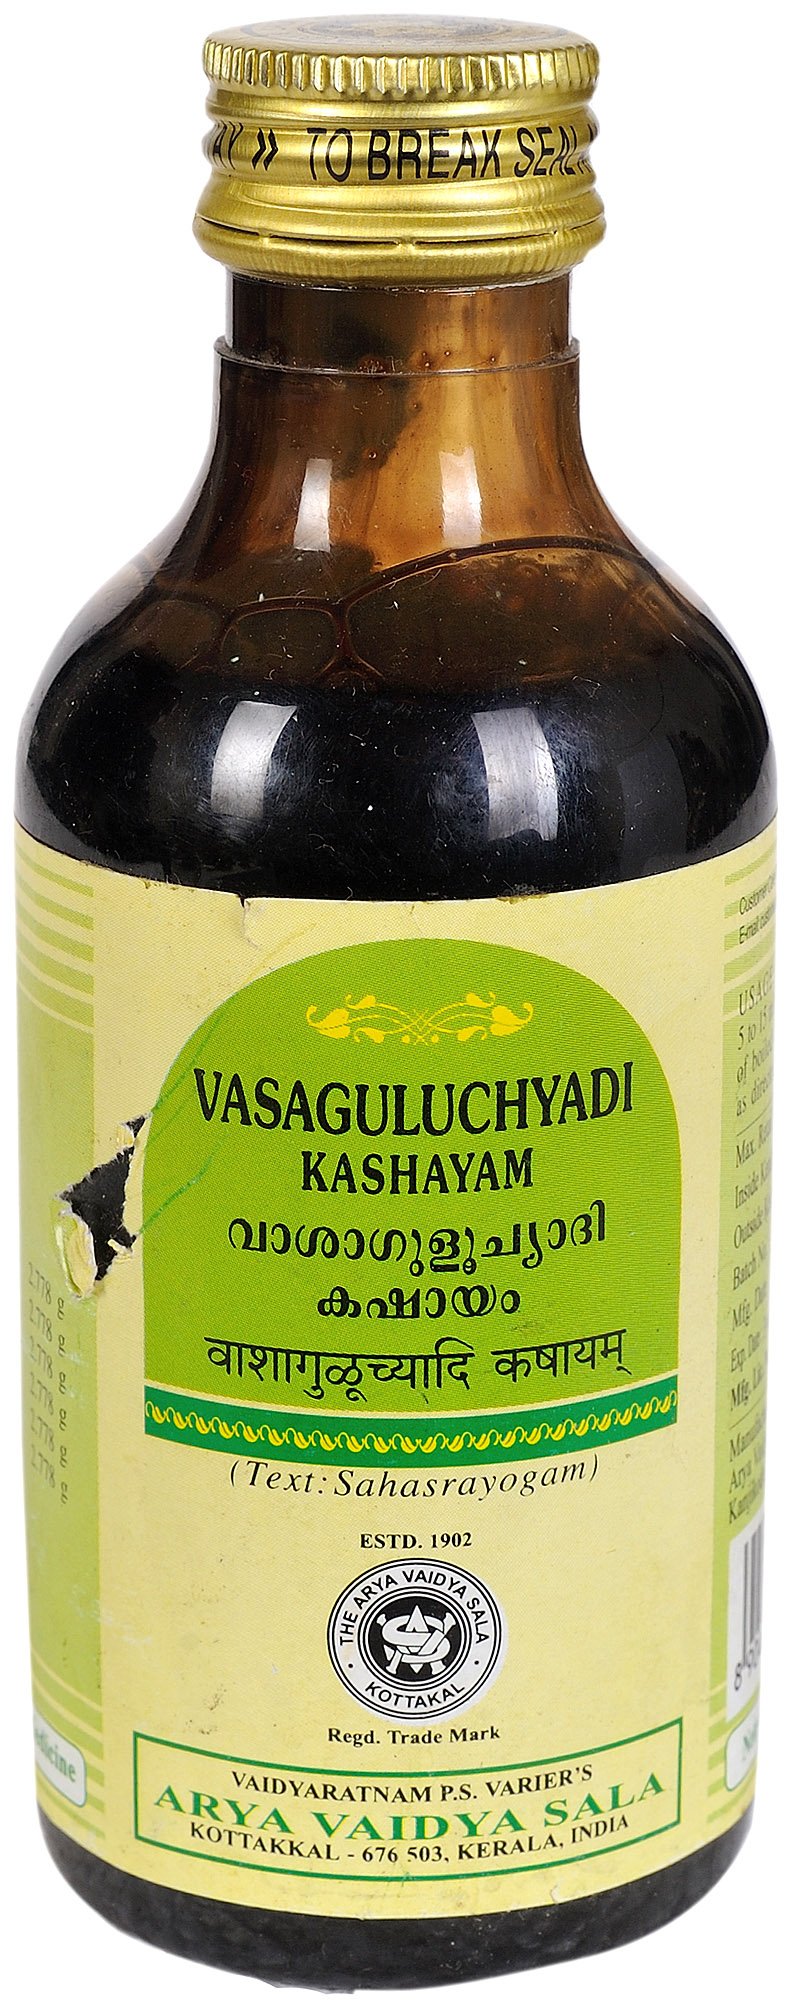 Vasaguluchyadi Kashayam - book cover